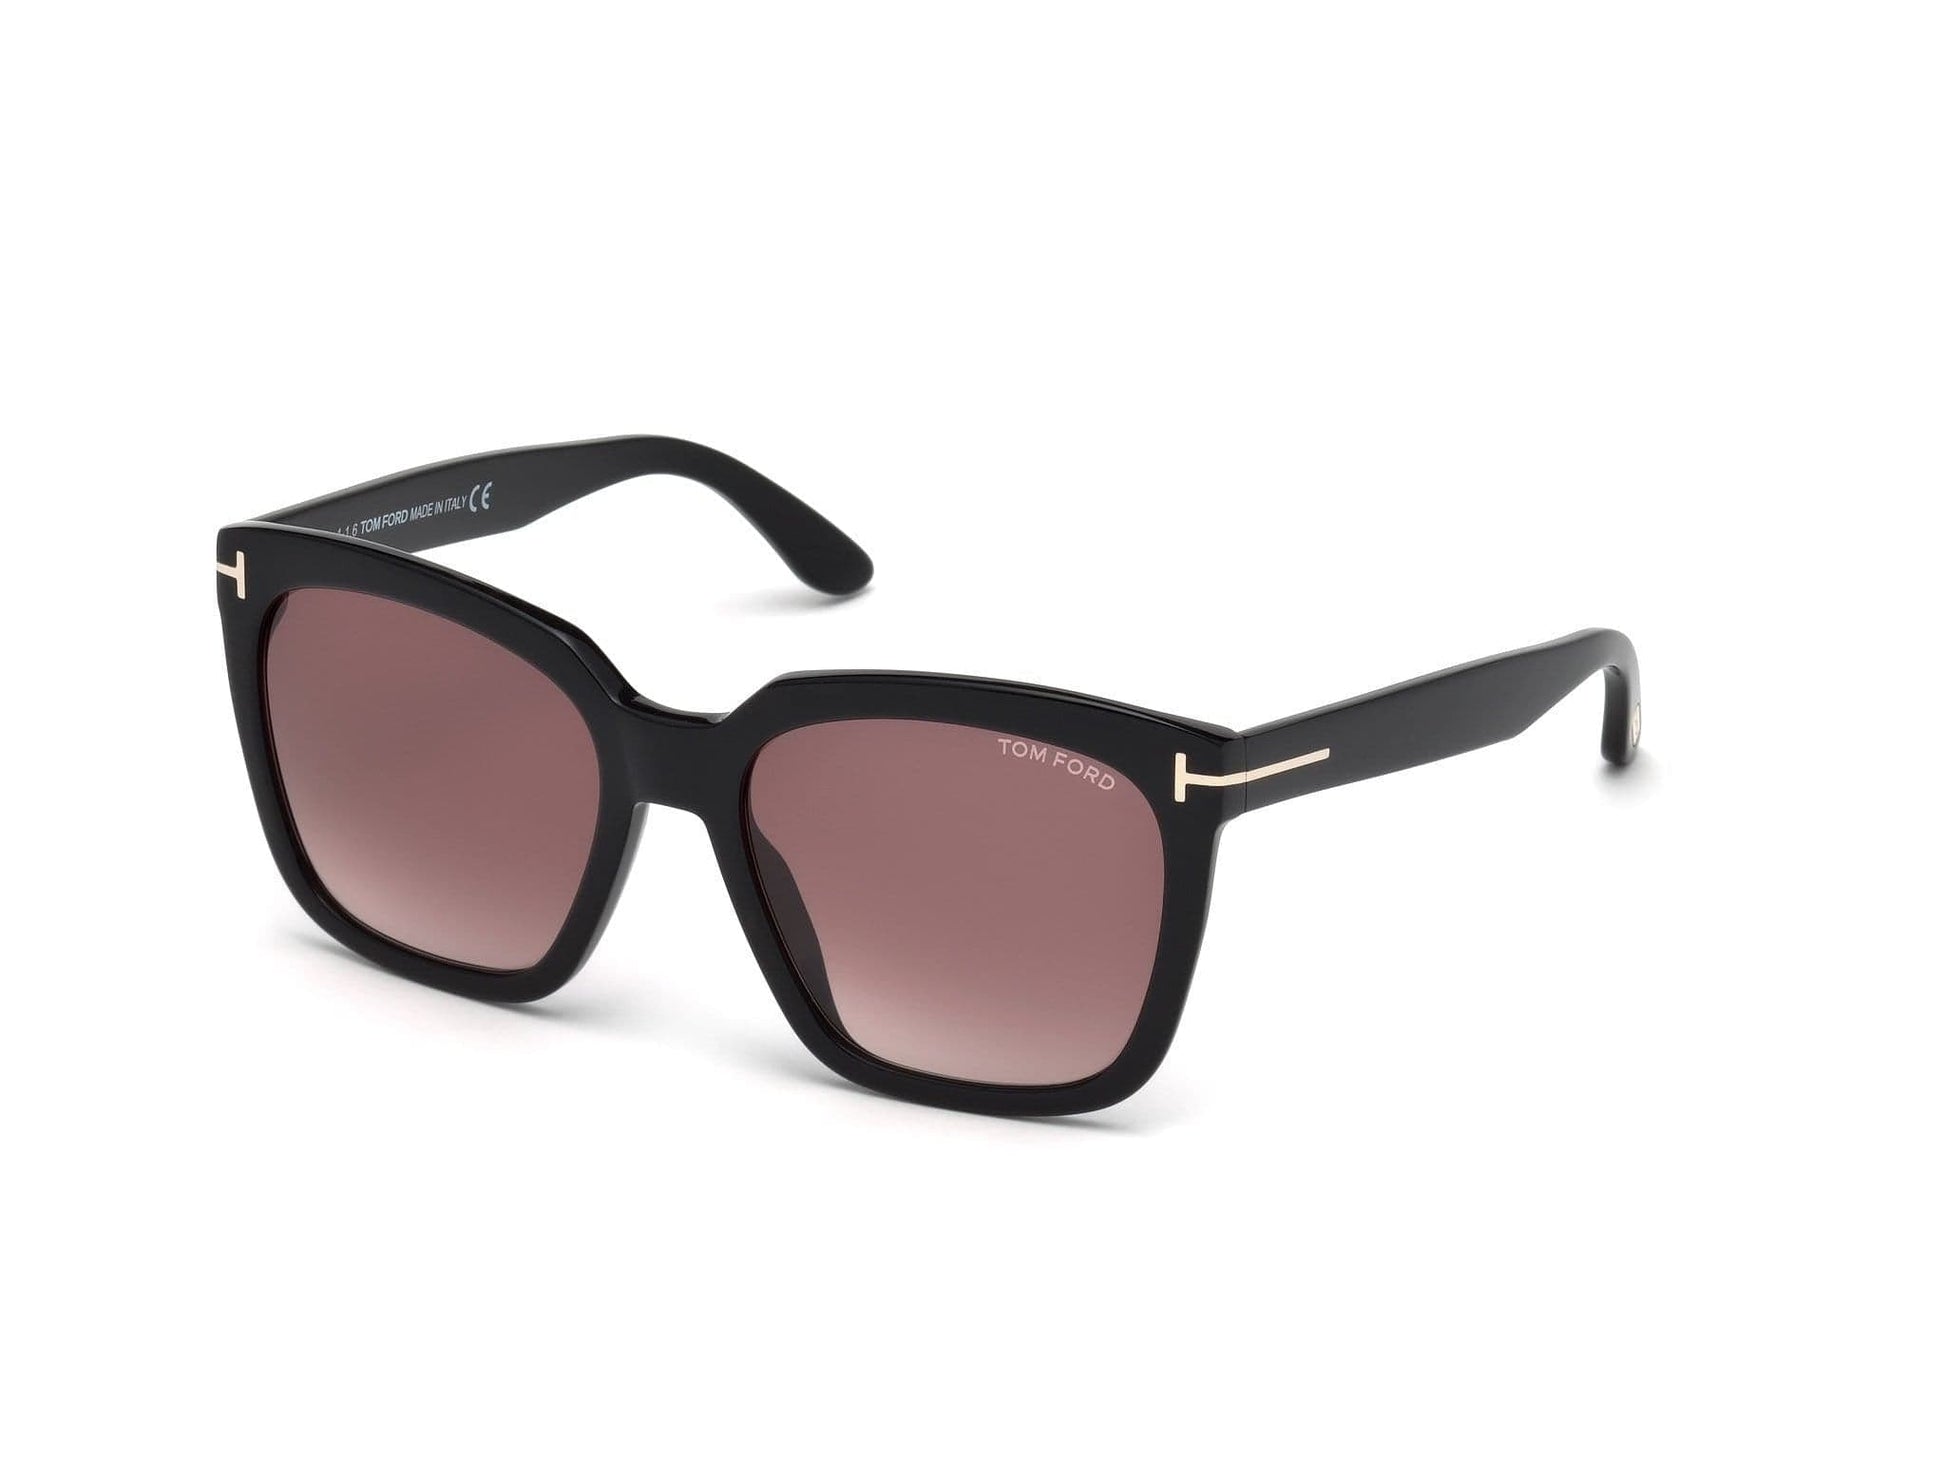 Tom Ford FT0502 Amarra Geometric Sunglasses 01T-01T - Shiny Black / Gradient Burgundy Lenses